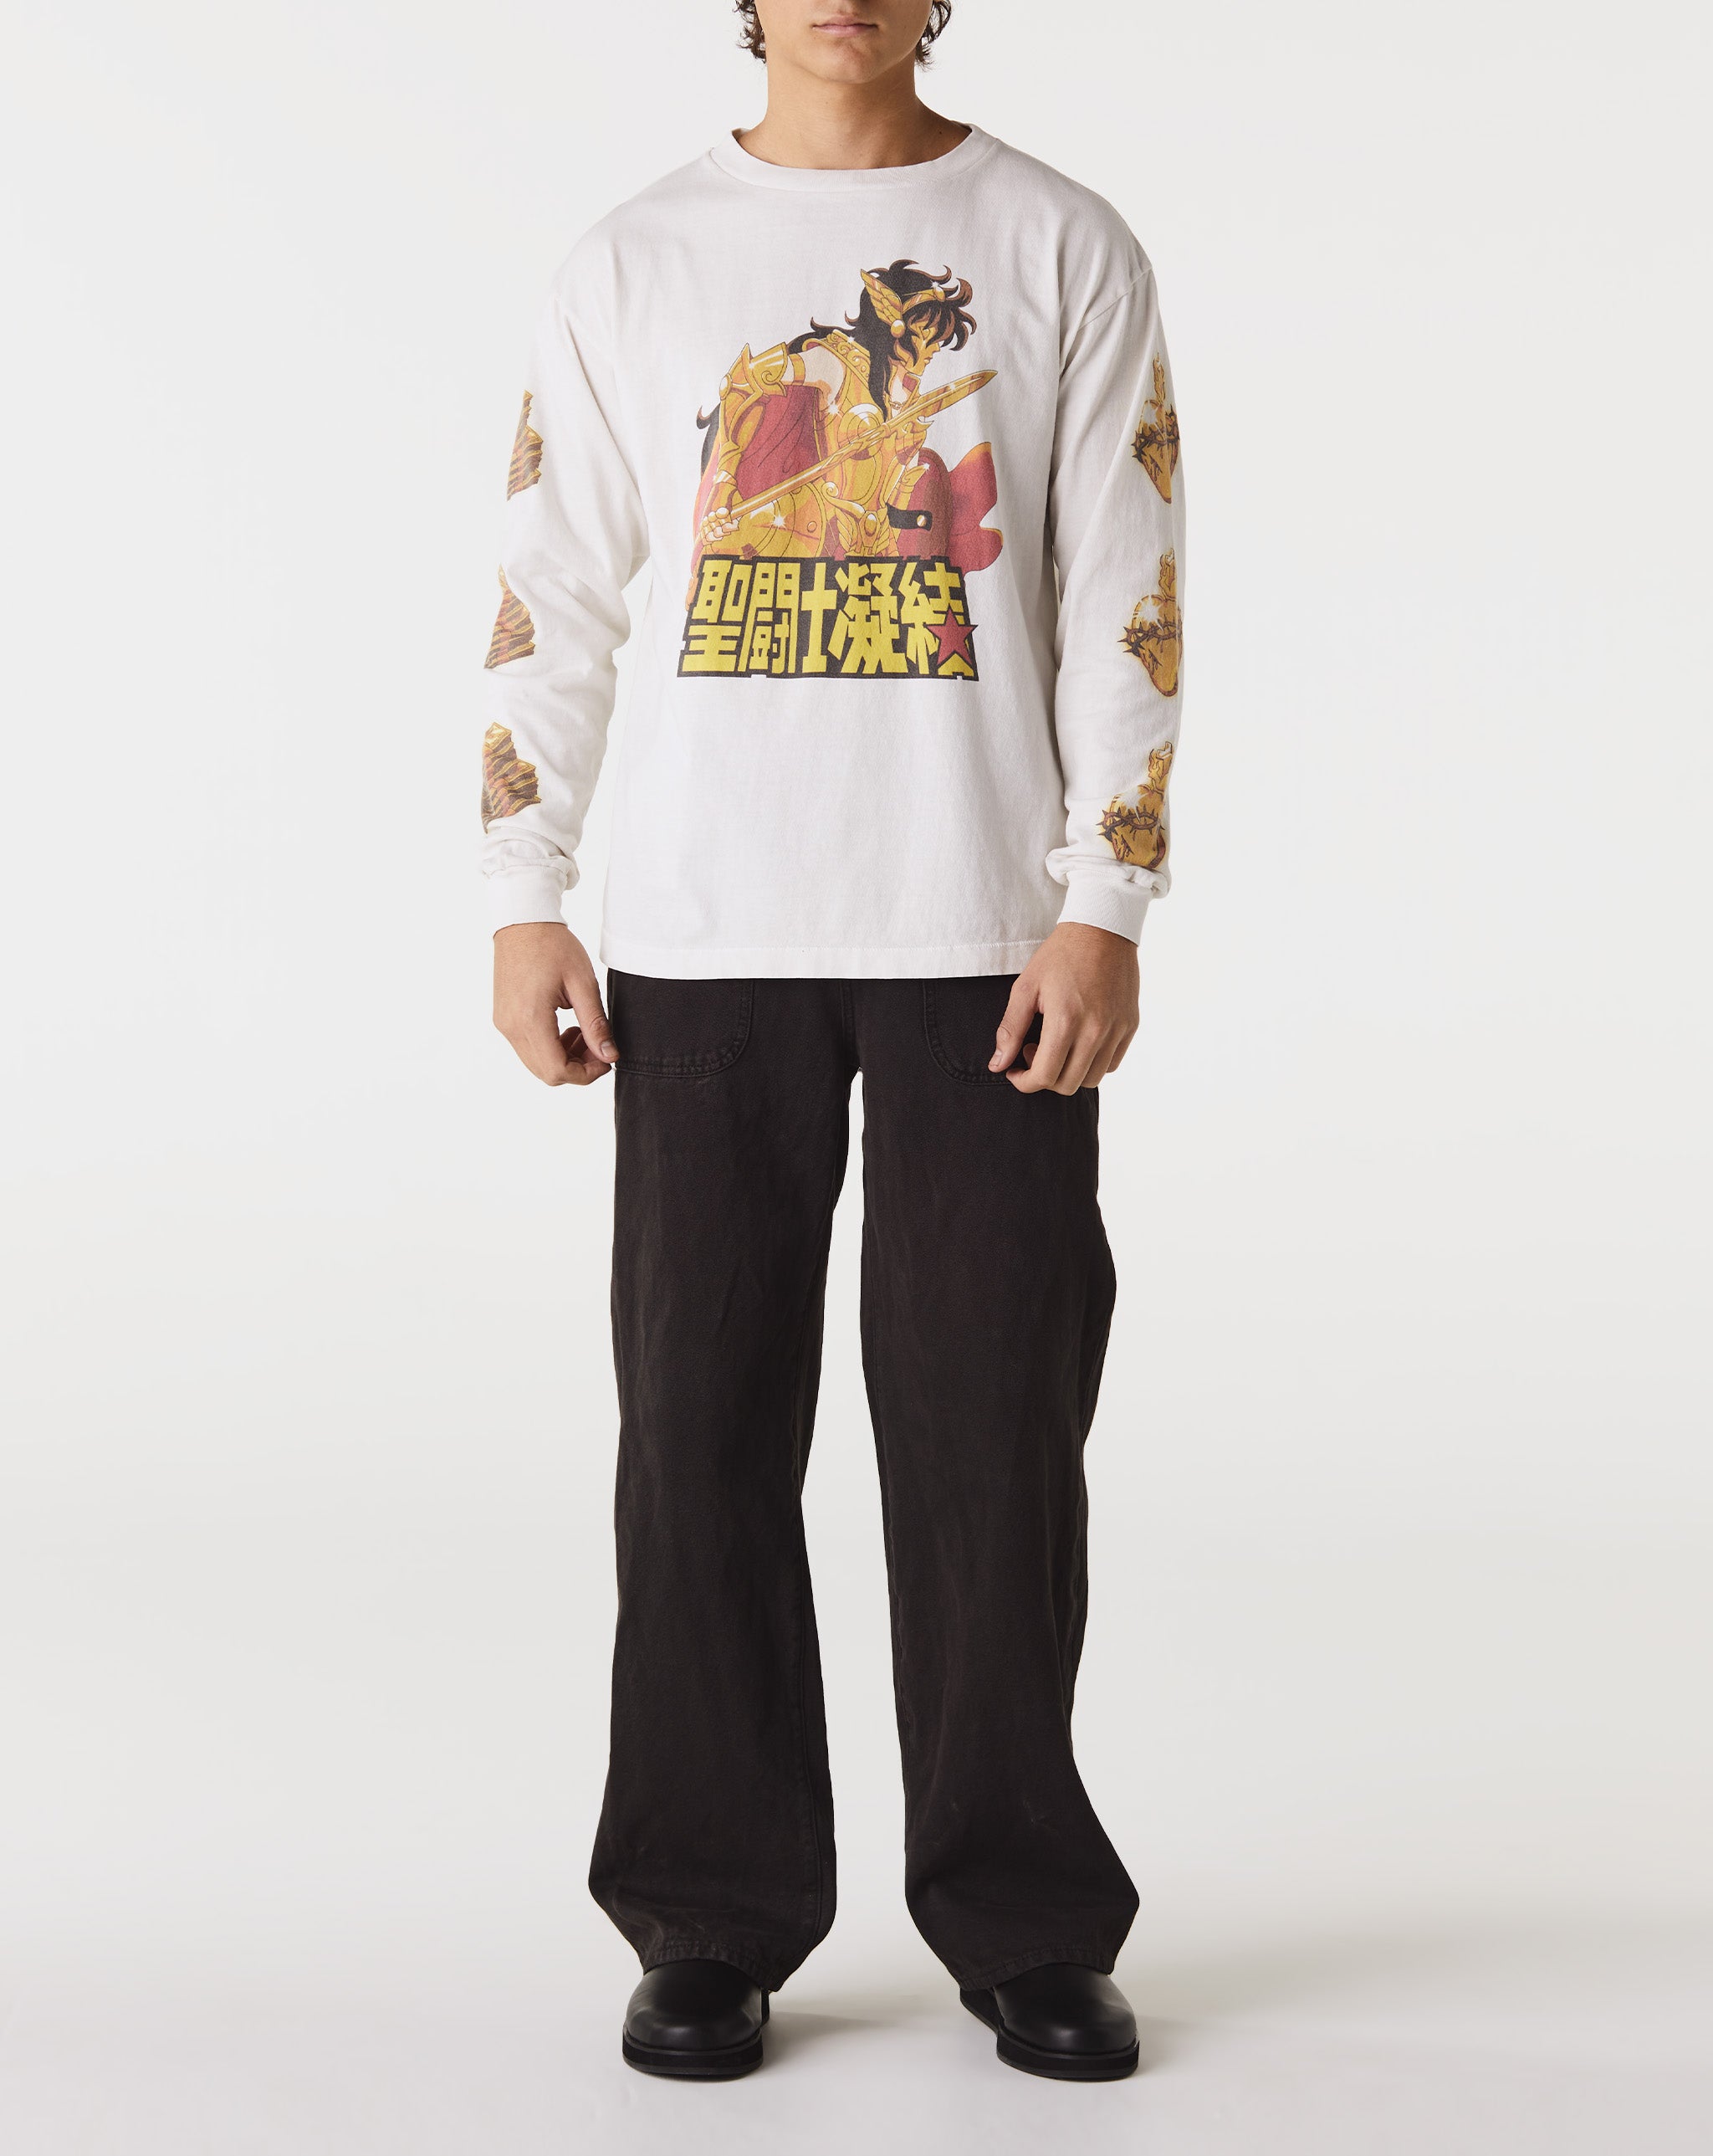 Saint Michael 聖闘士 Long Sleeve T-Shirt  - Cheap Cerbe Jordan outlet